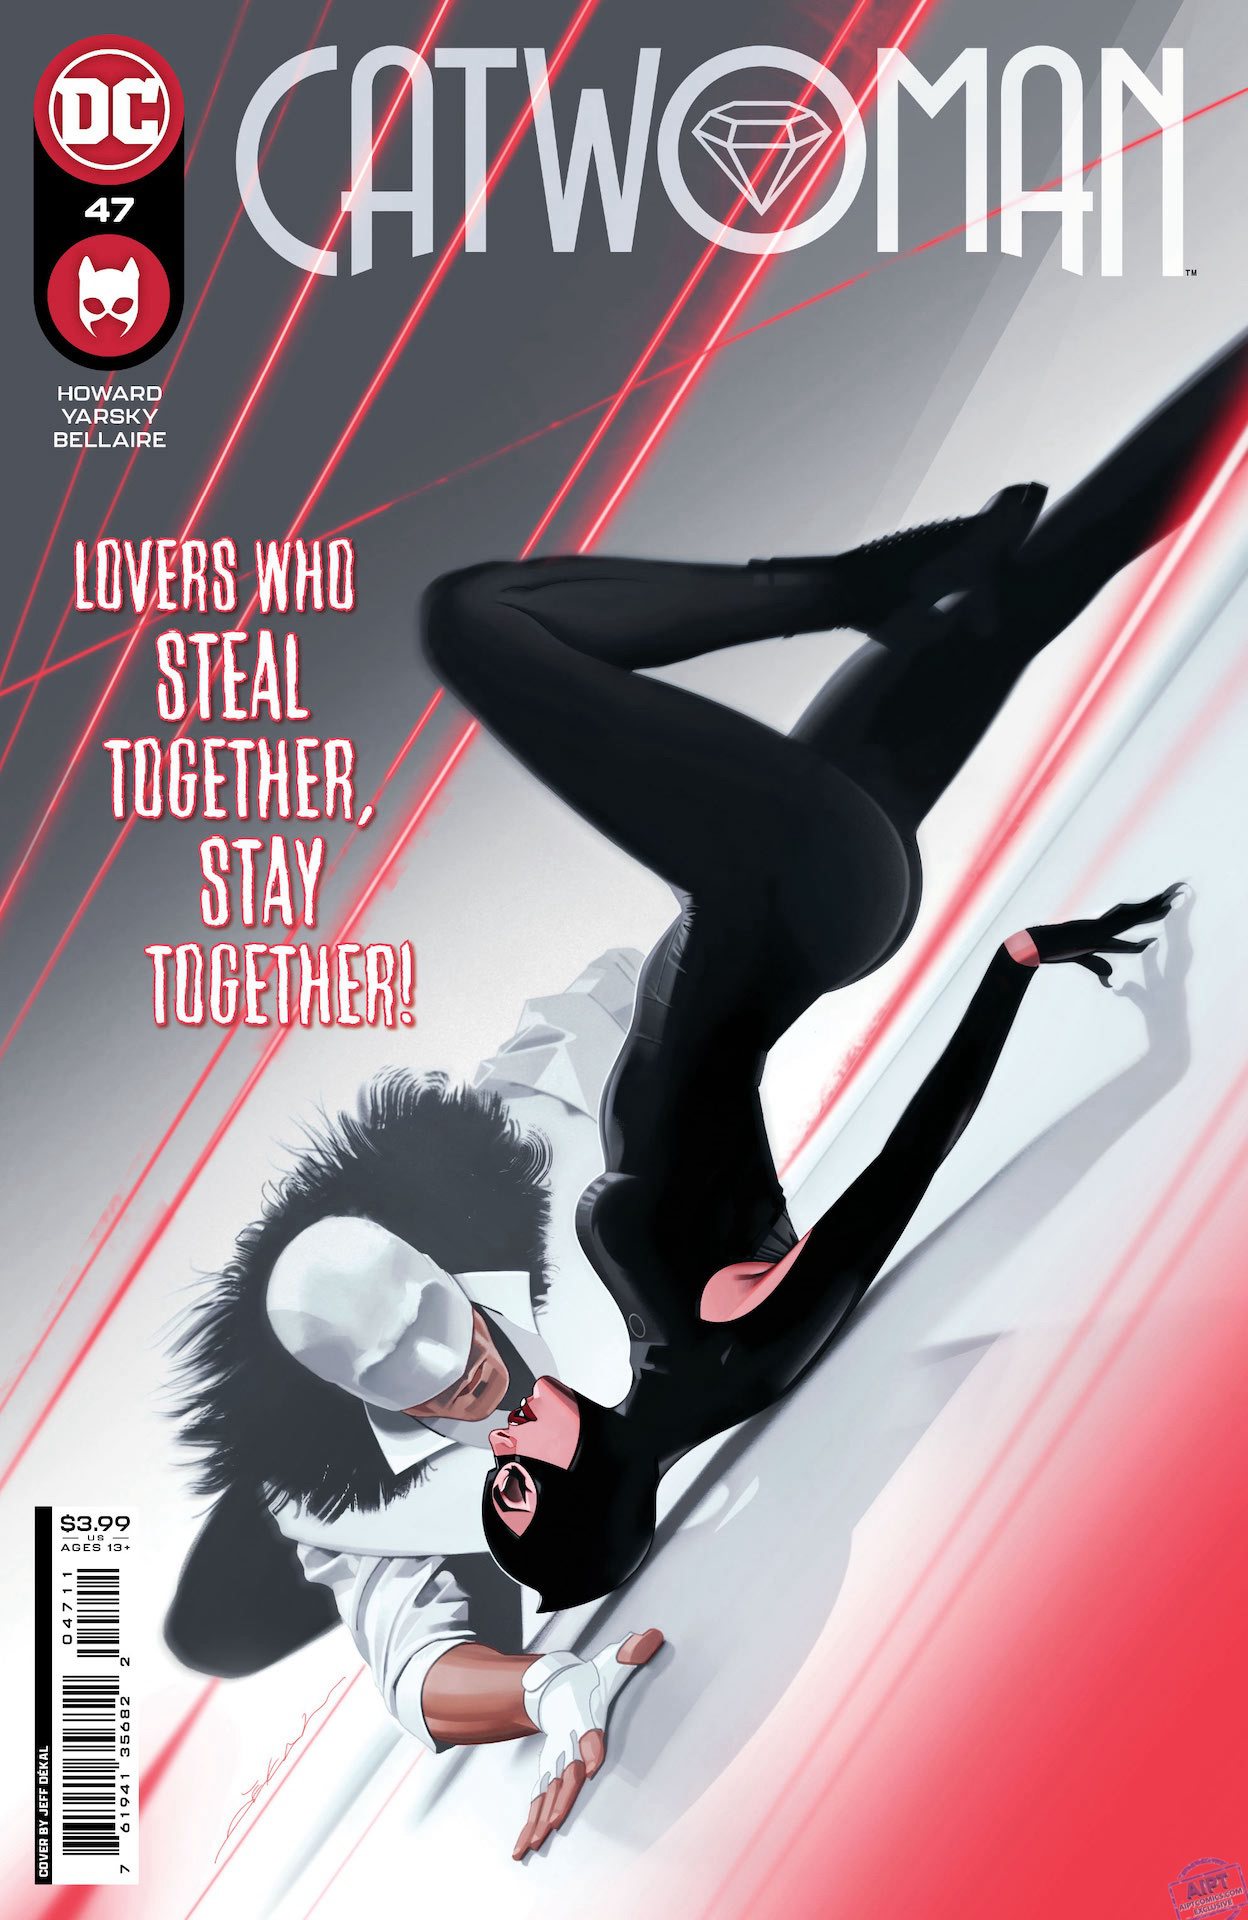 DC Previe: Catwoman #47